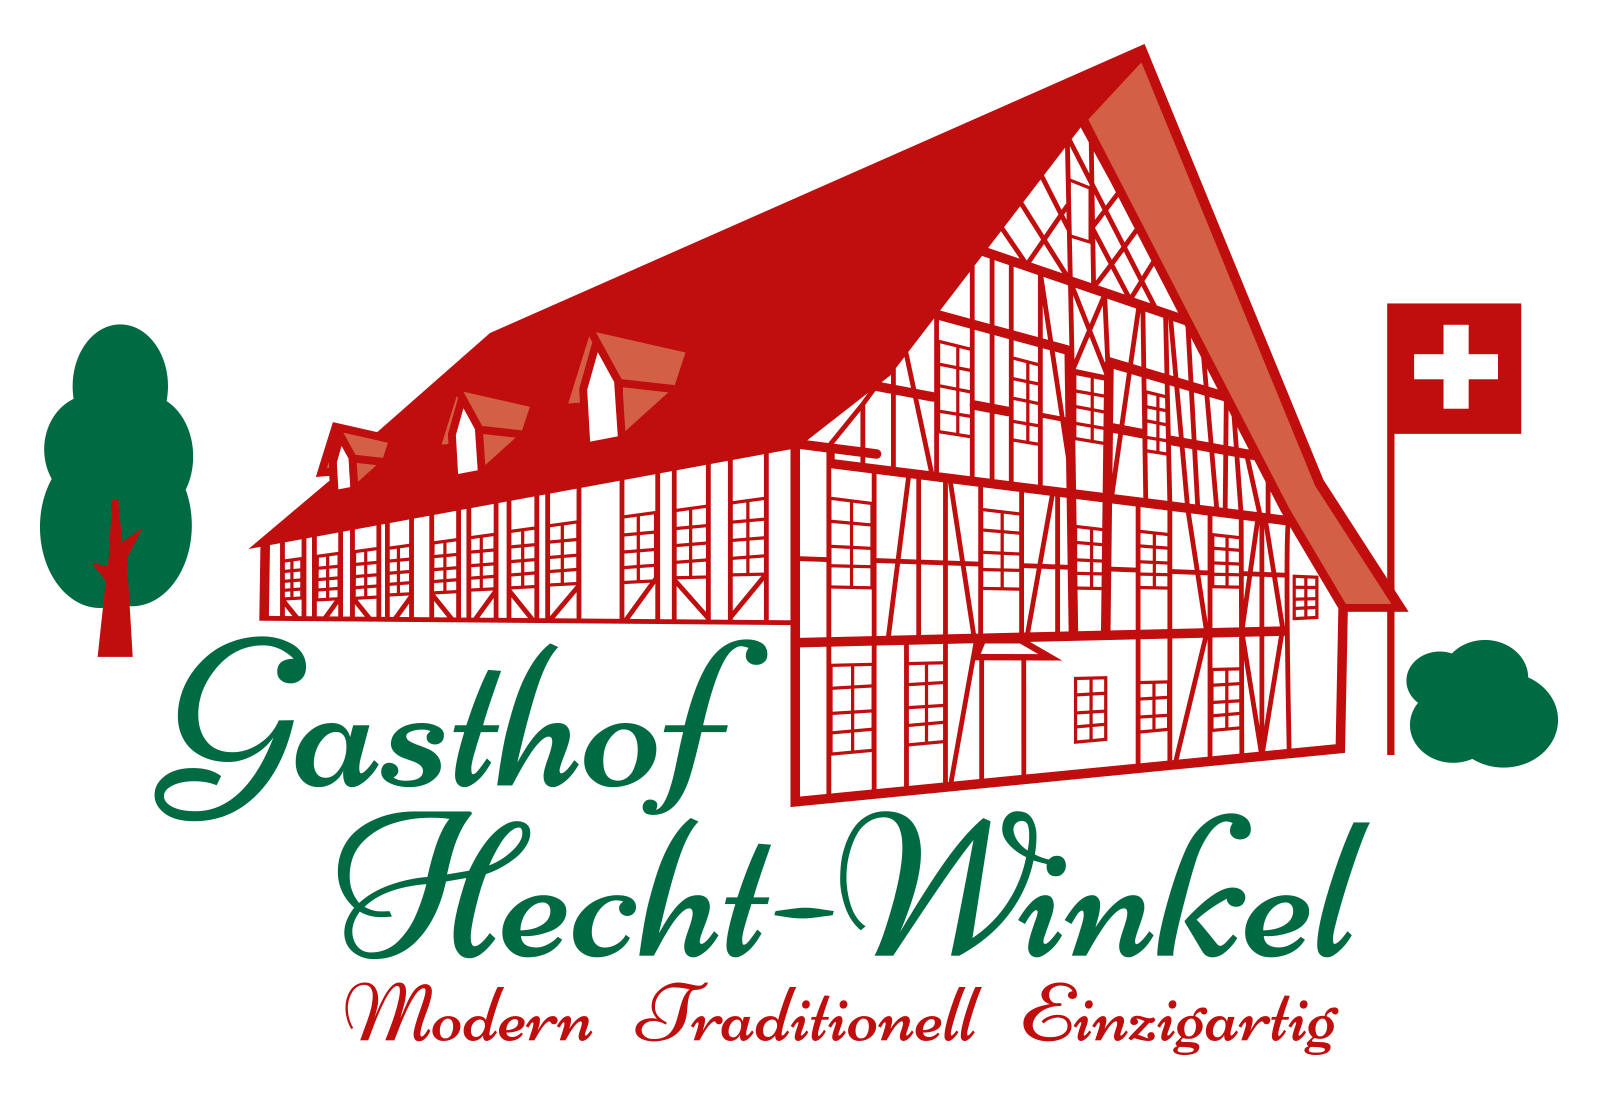 Gasthof Hecht